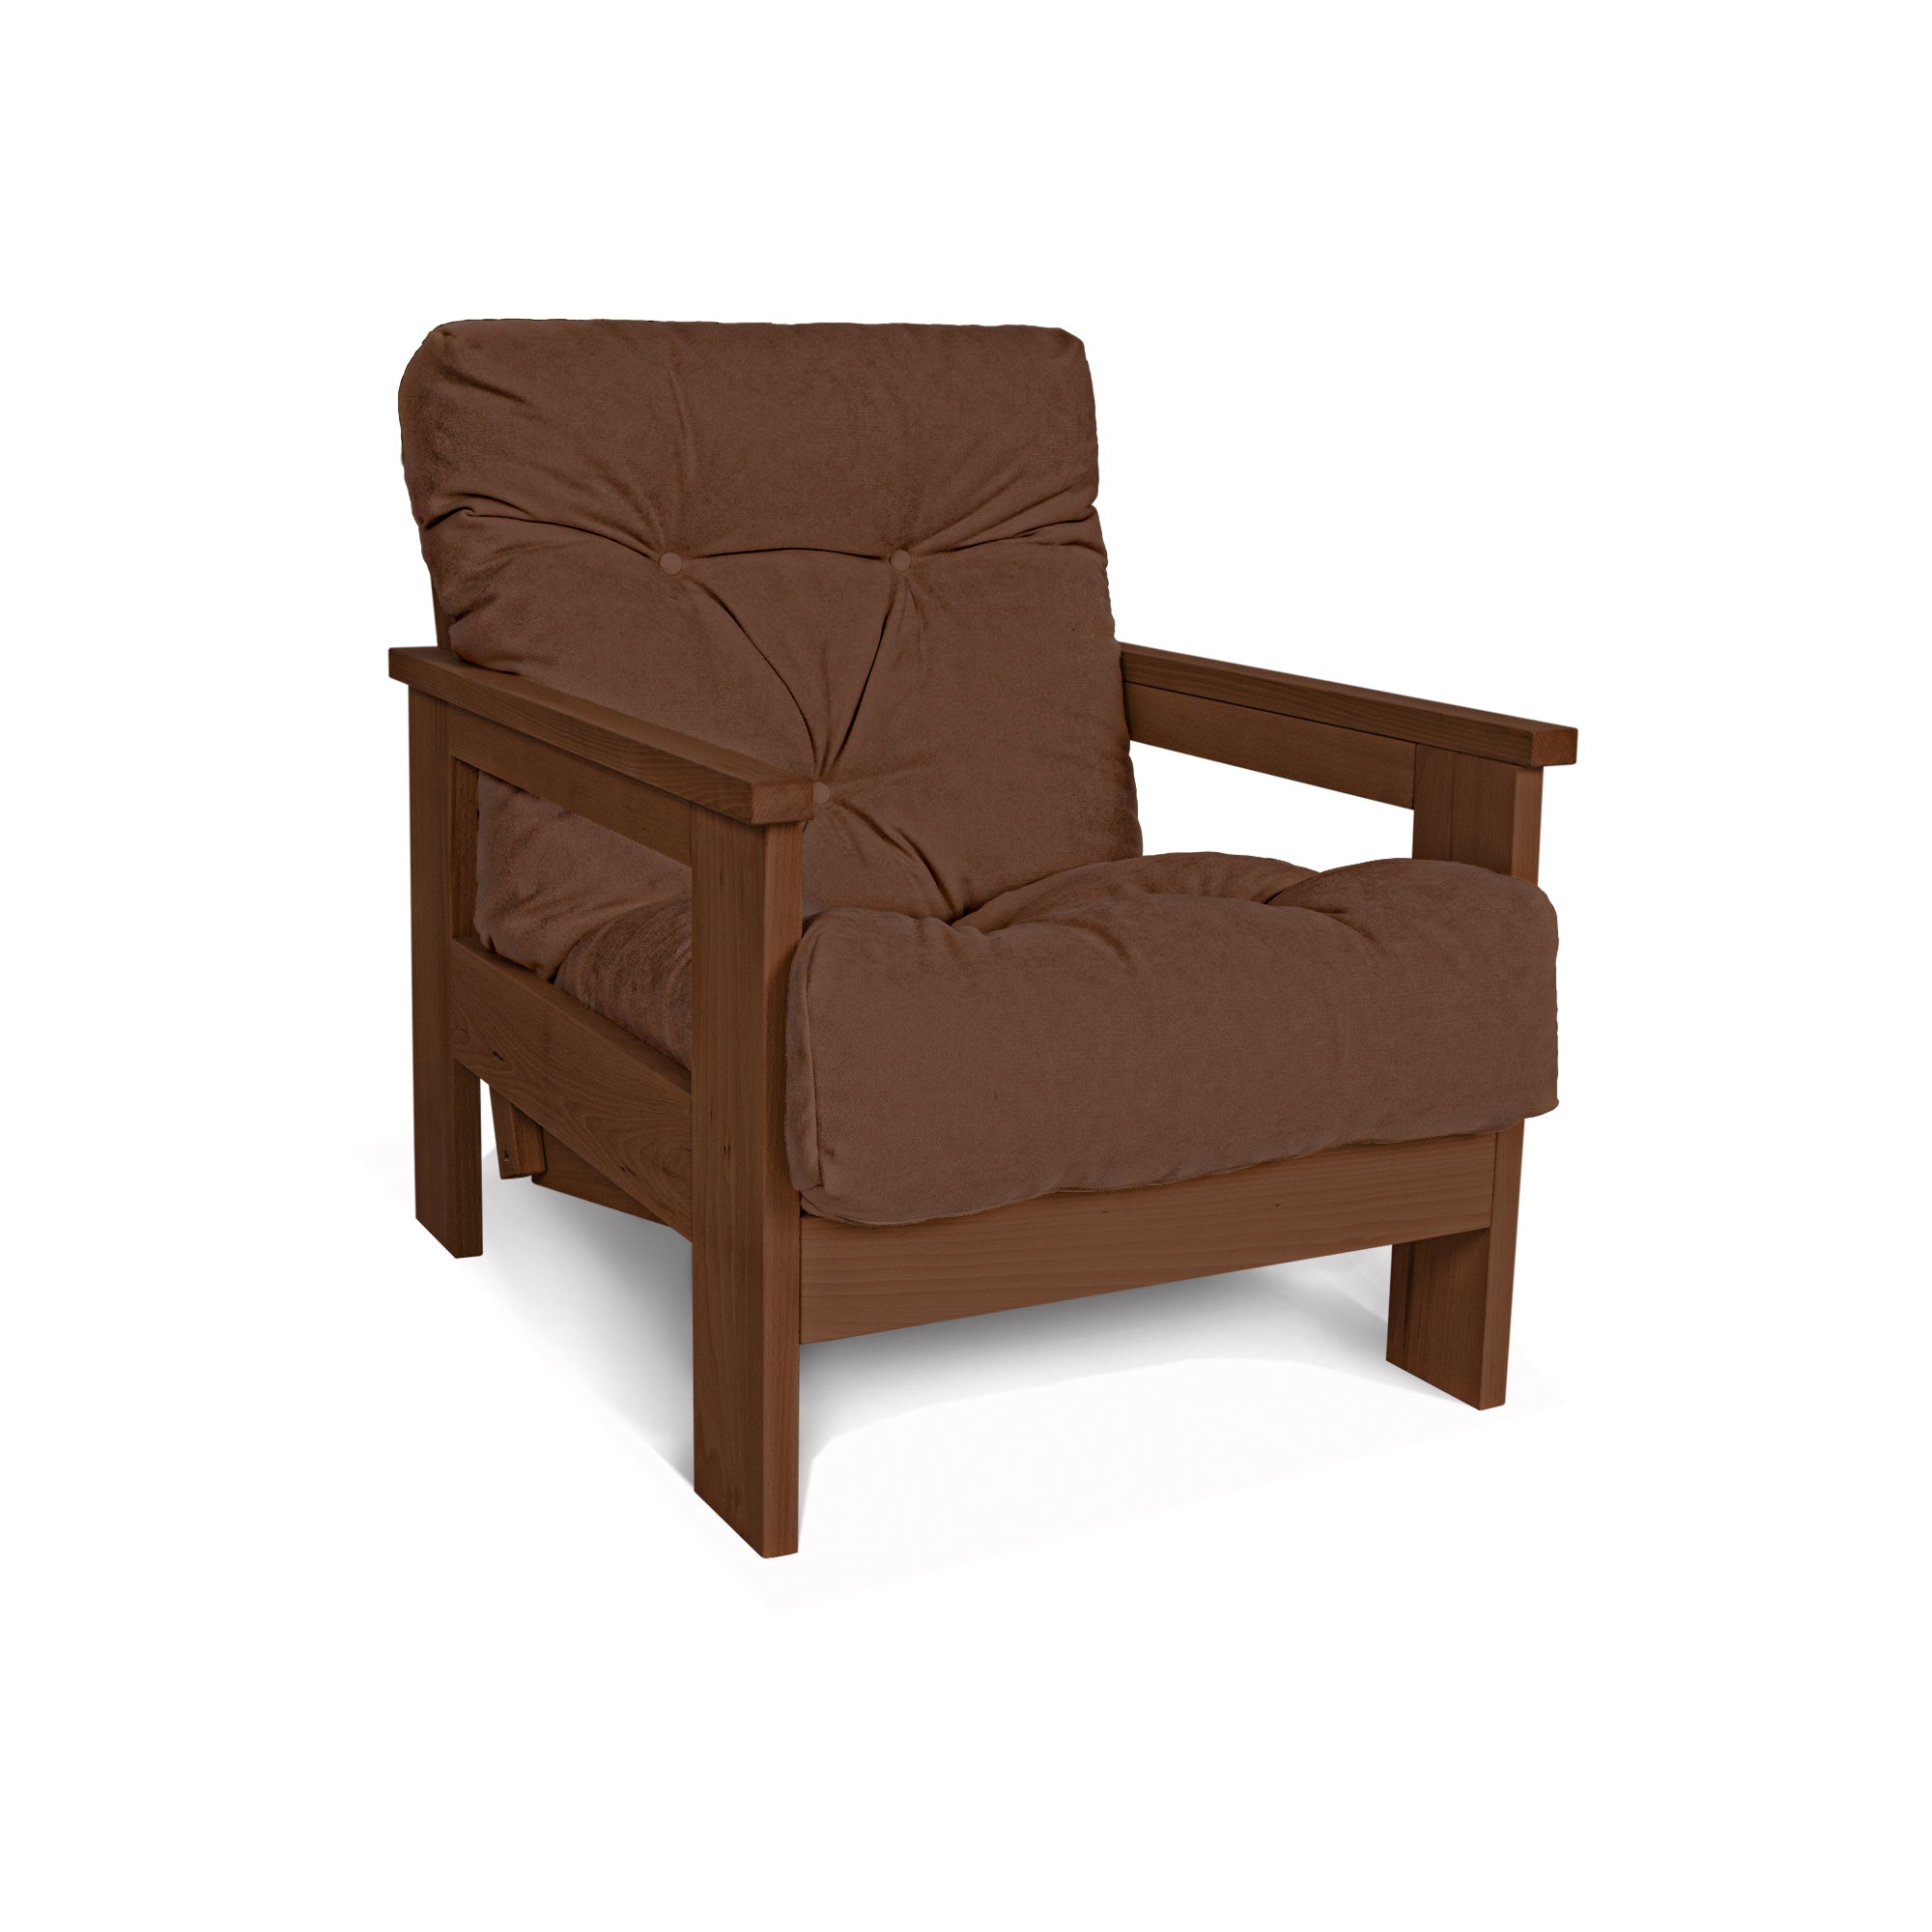 MEXICO Armchair, Beech Wood Frame, Walnut Colour-brown fabric